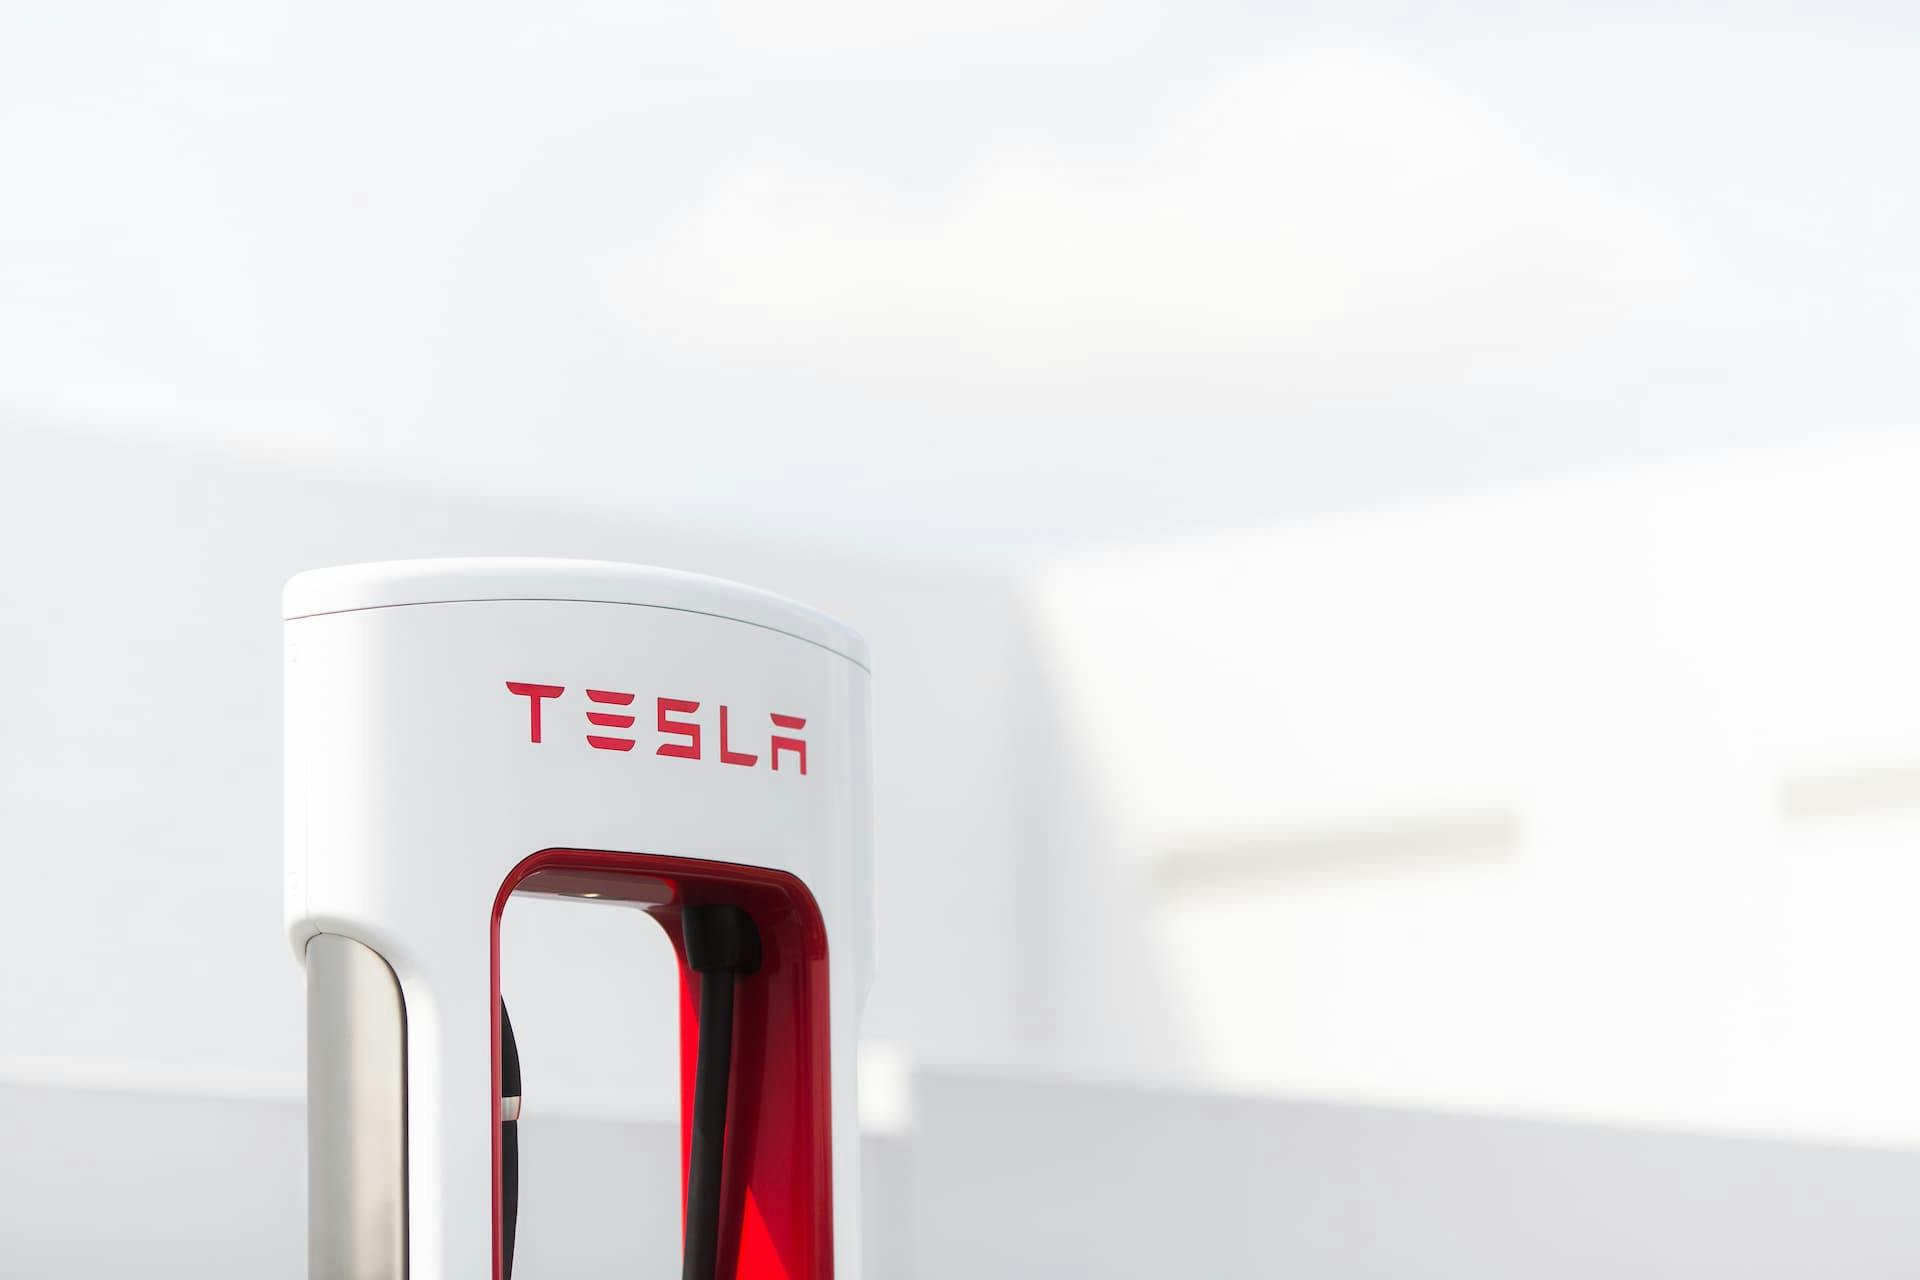 Tesla Supercharging stall with red Tesla logo